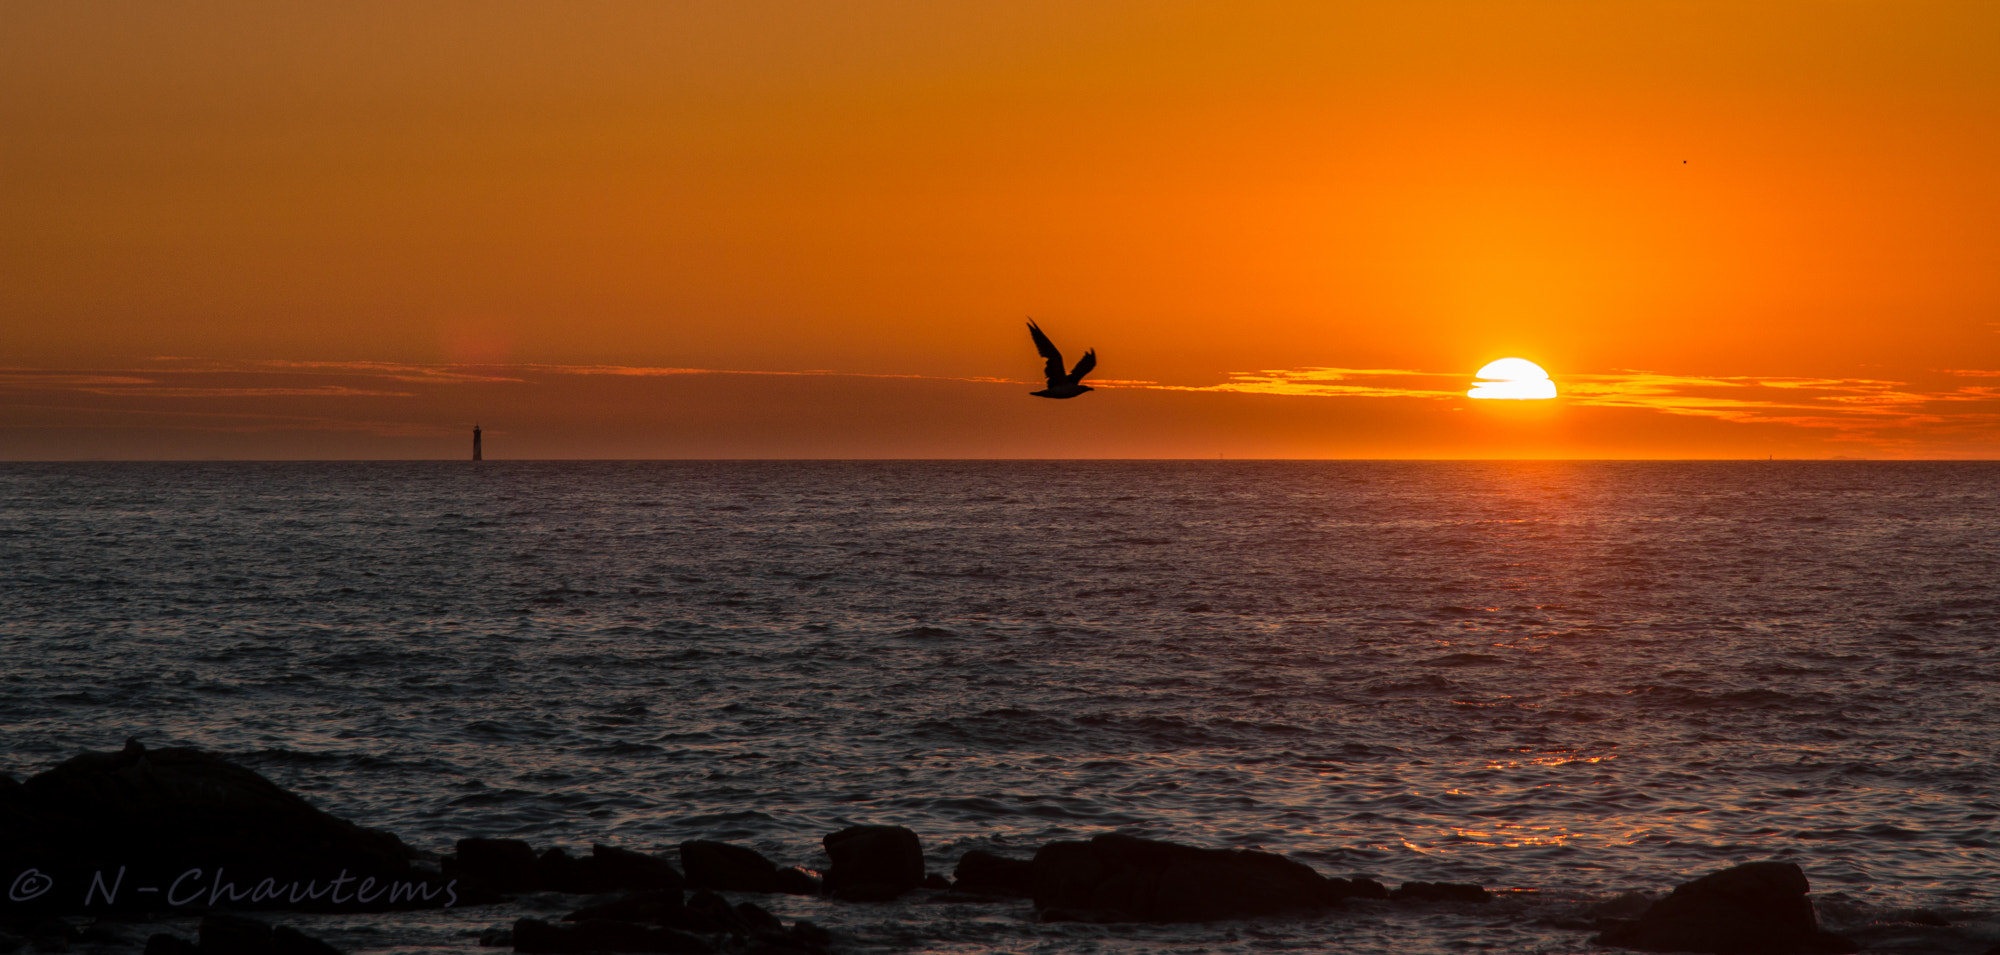 Canon EOS 70D + Sigma 24-105mm f/4 DG OS HSM | A sample photo. Seagulls through sun photography